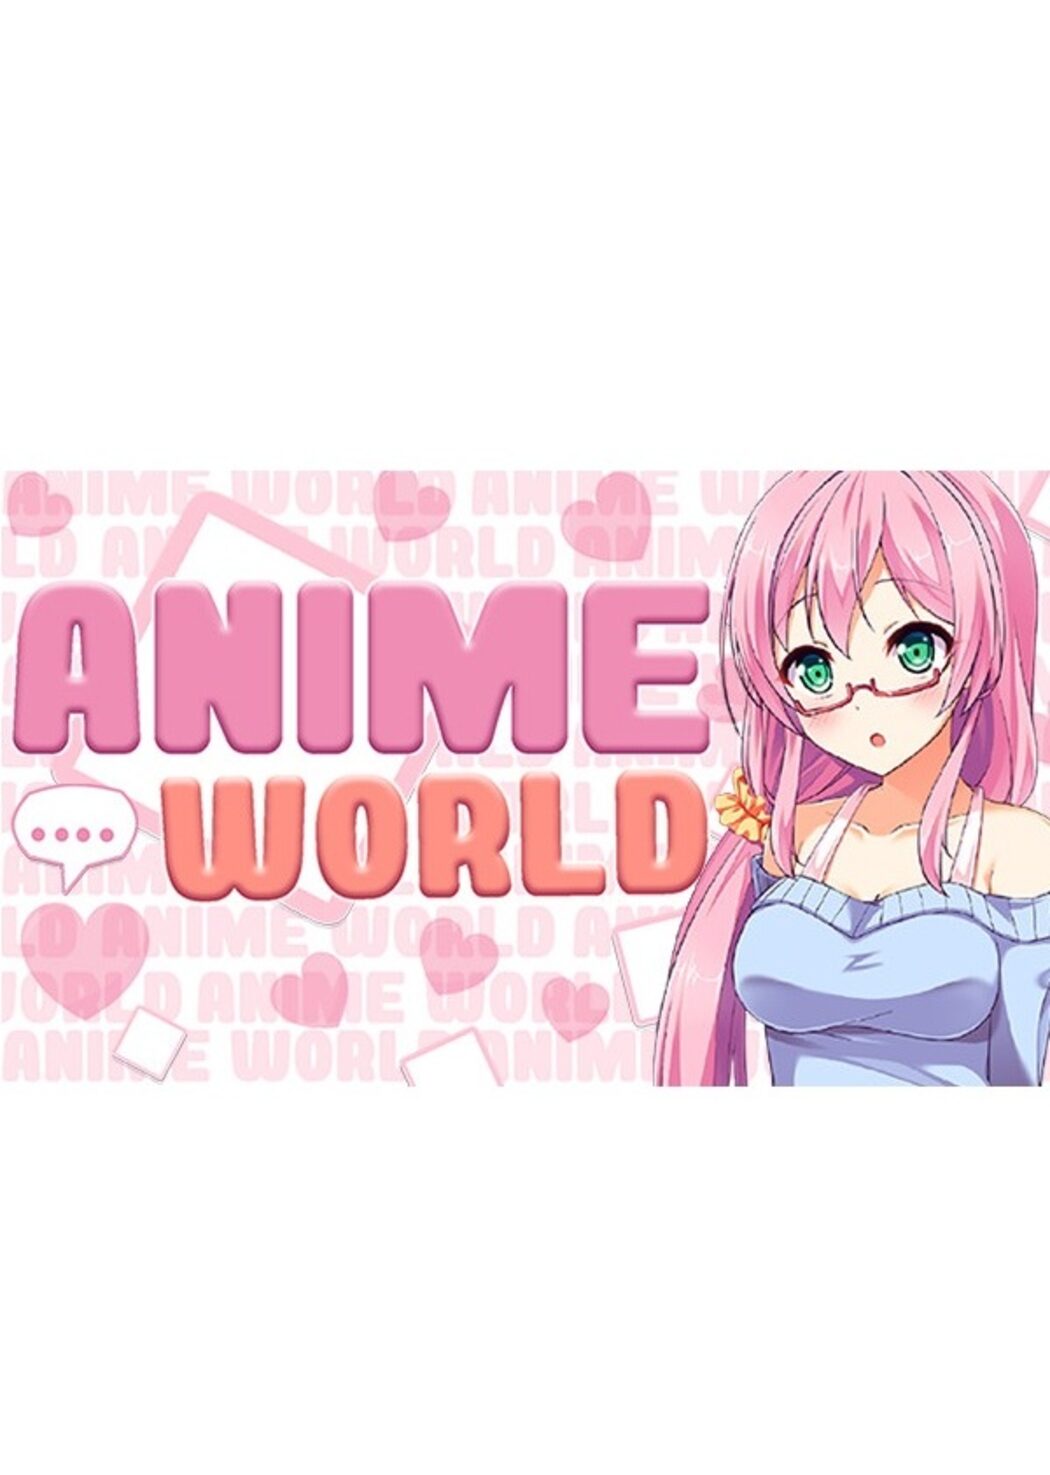 Update more than 166 anime worlds sim codes - ceg.edu.vn